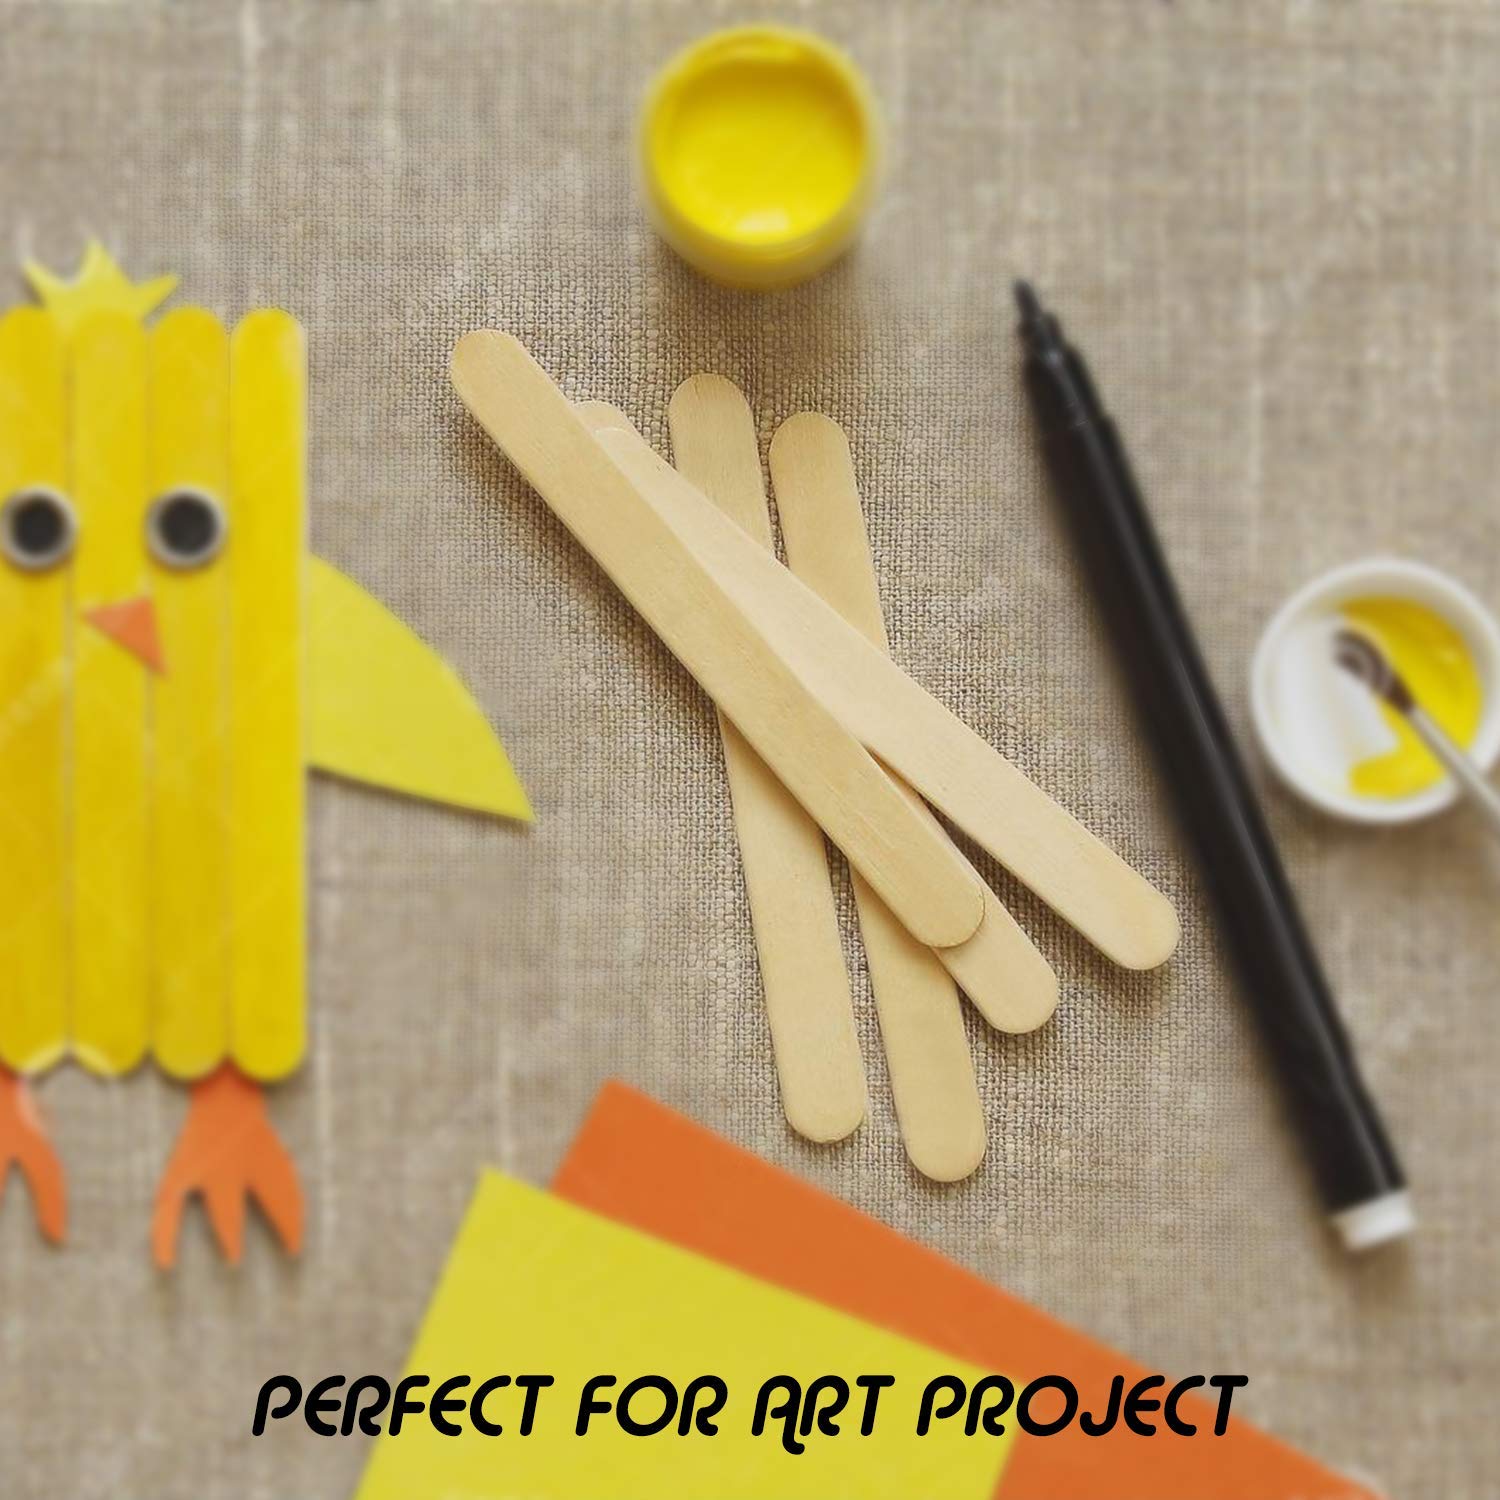 1000pcs Complete Art Supplies for Kids Craft Art Kit for Boys